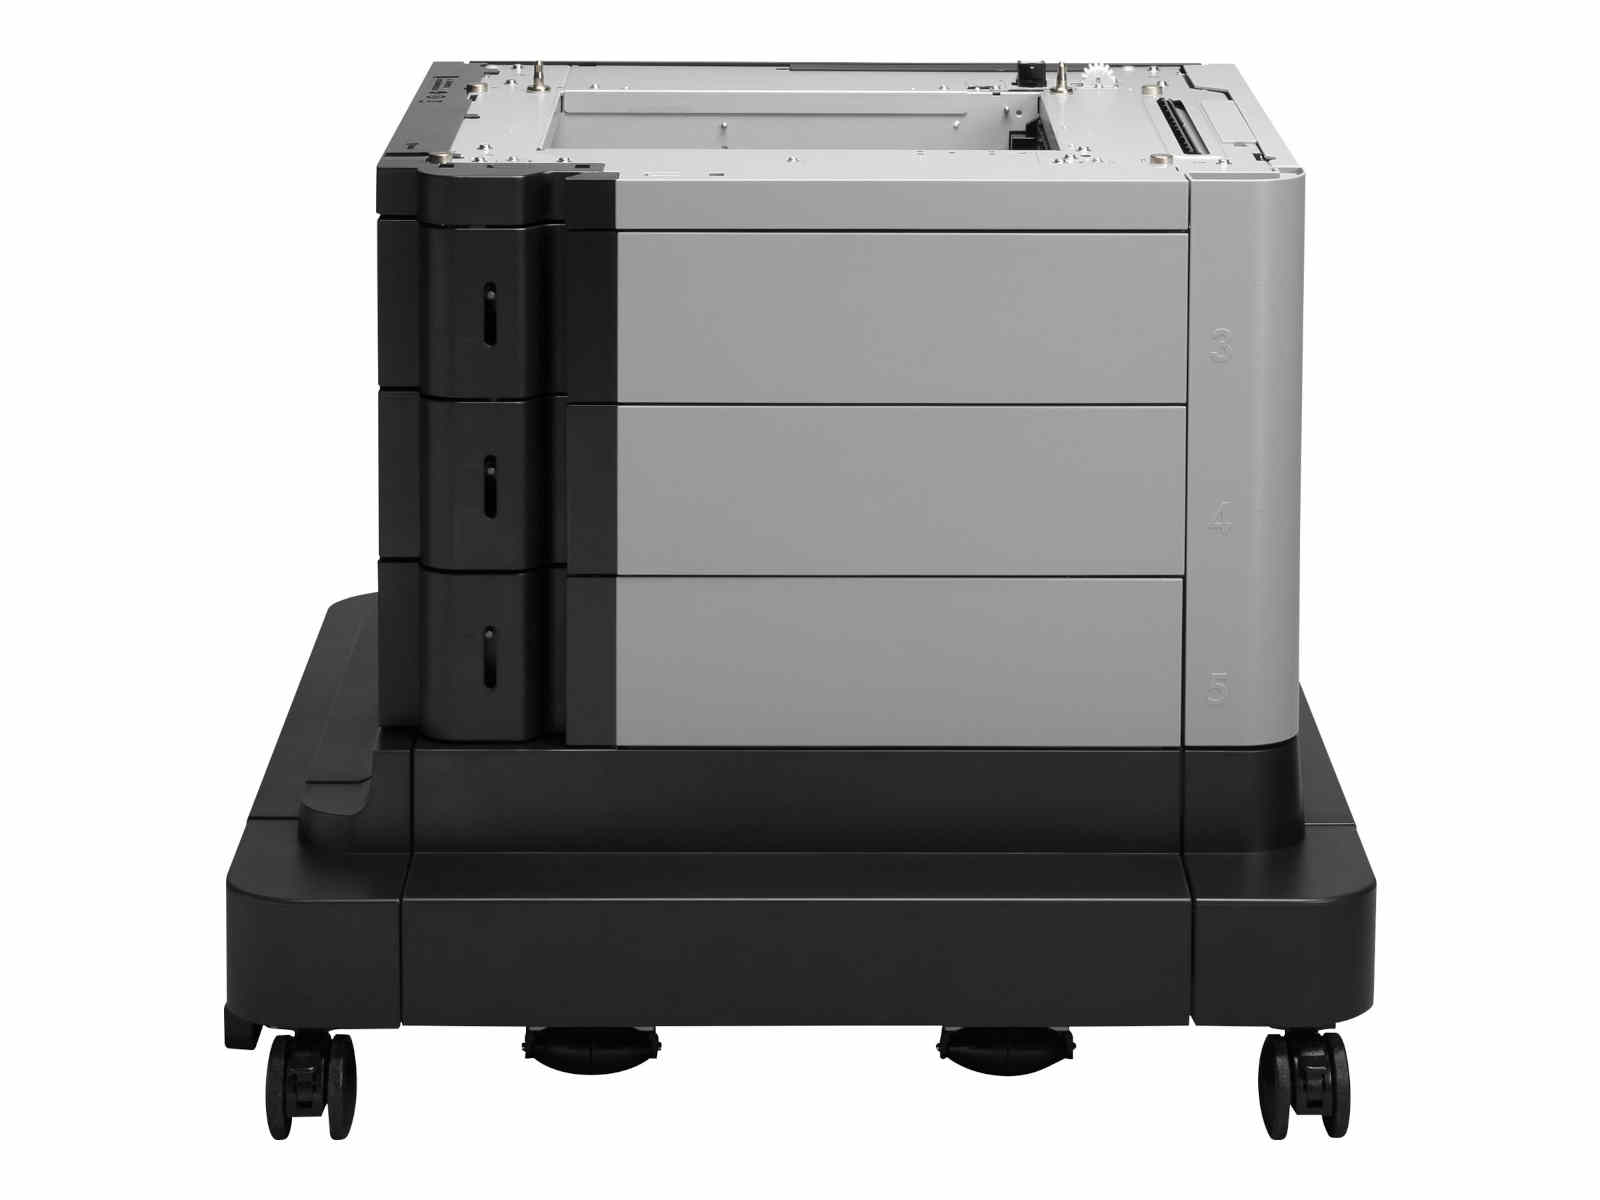 printer supplies